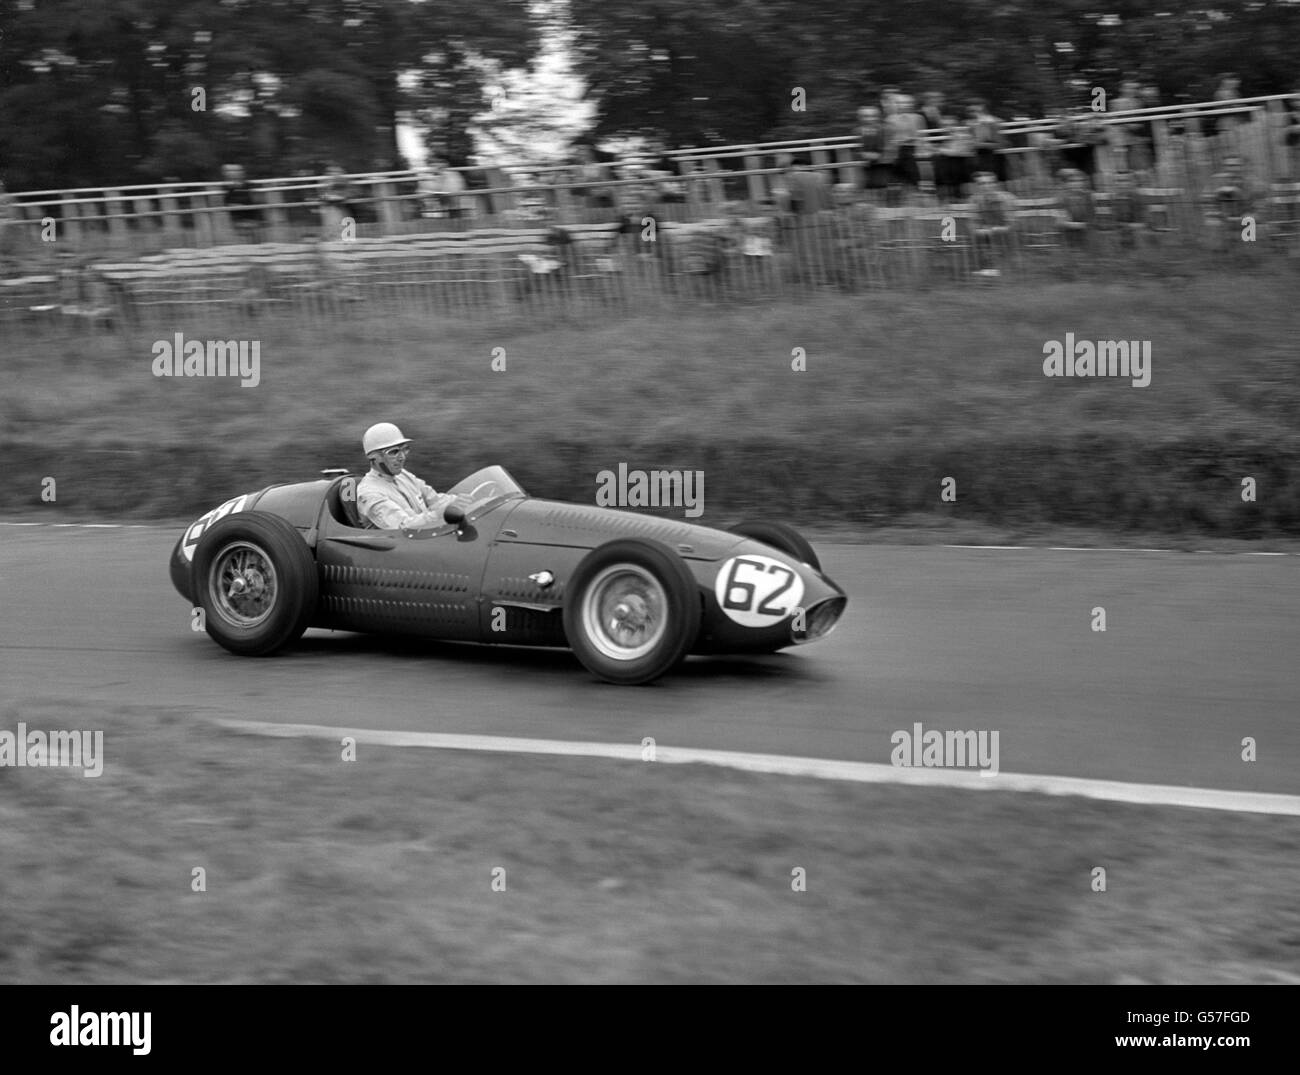 Motor Sports - National (Open) Motor Race - Londra. Roy Salvadori guida una Maserati al Crystal Palace. Foto Stock